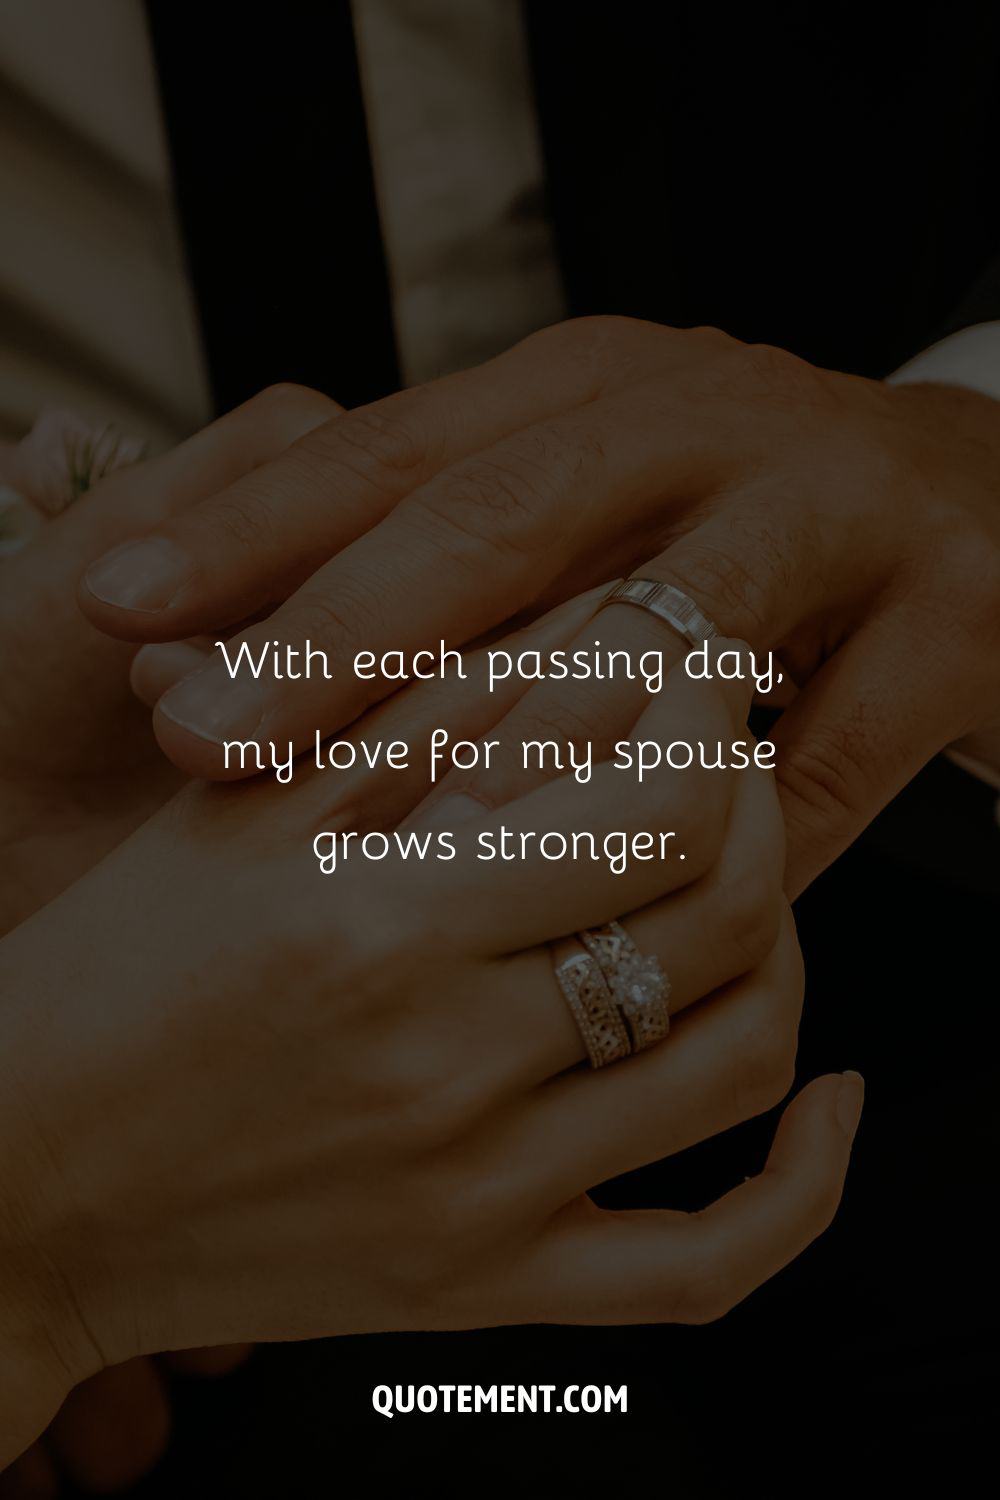 Imagen de manos con anillos representando la afirmación matrimonial.